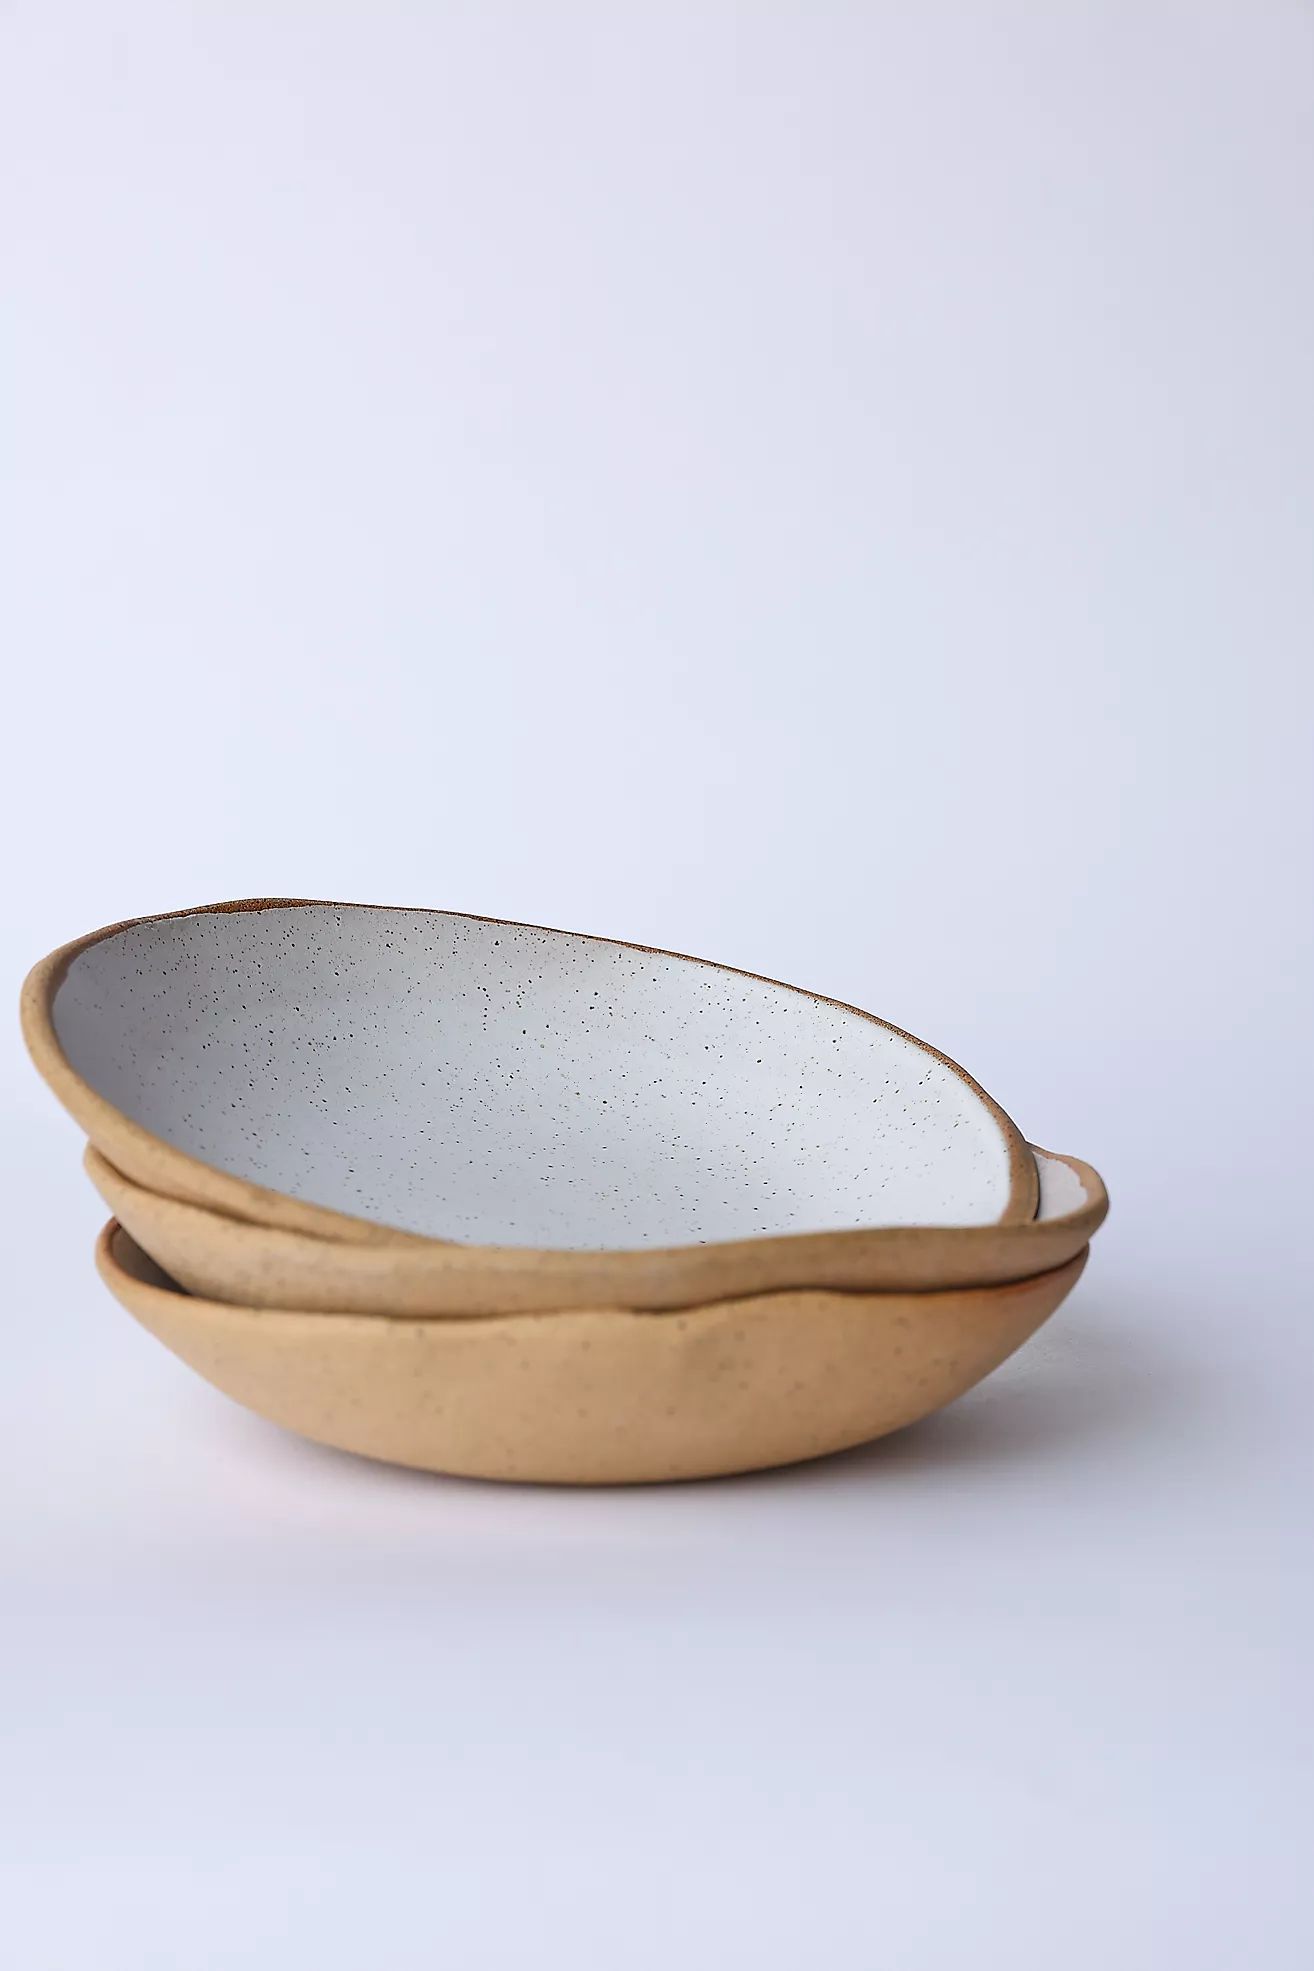 Earth + Element Ceramics Rustic Bowl | Anthropologie (US)